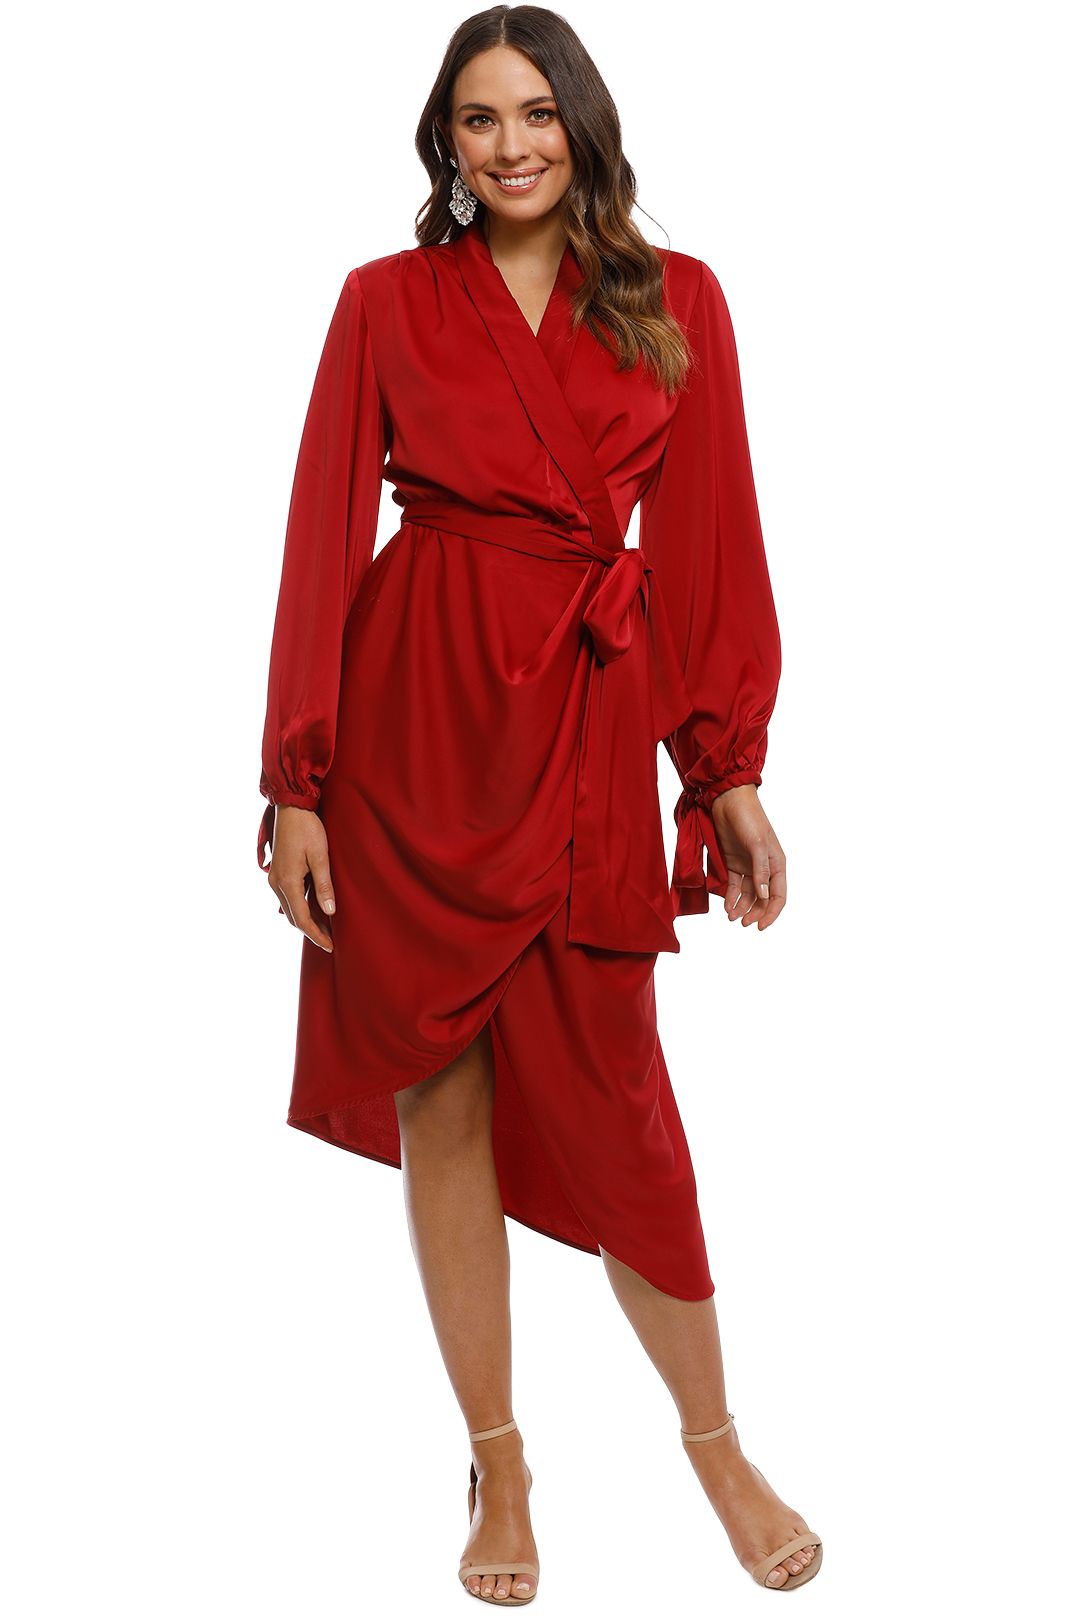 CMEO Collective - Influential LS Dress - Crimson - Front